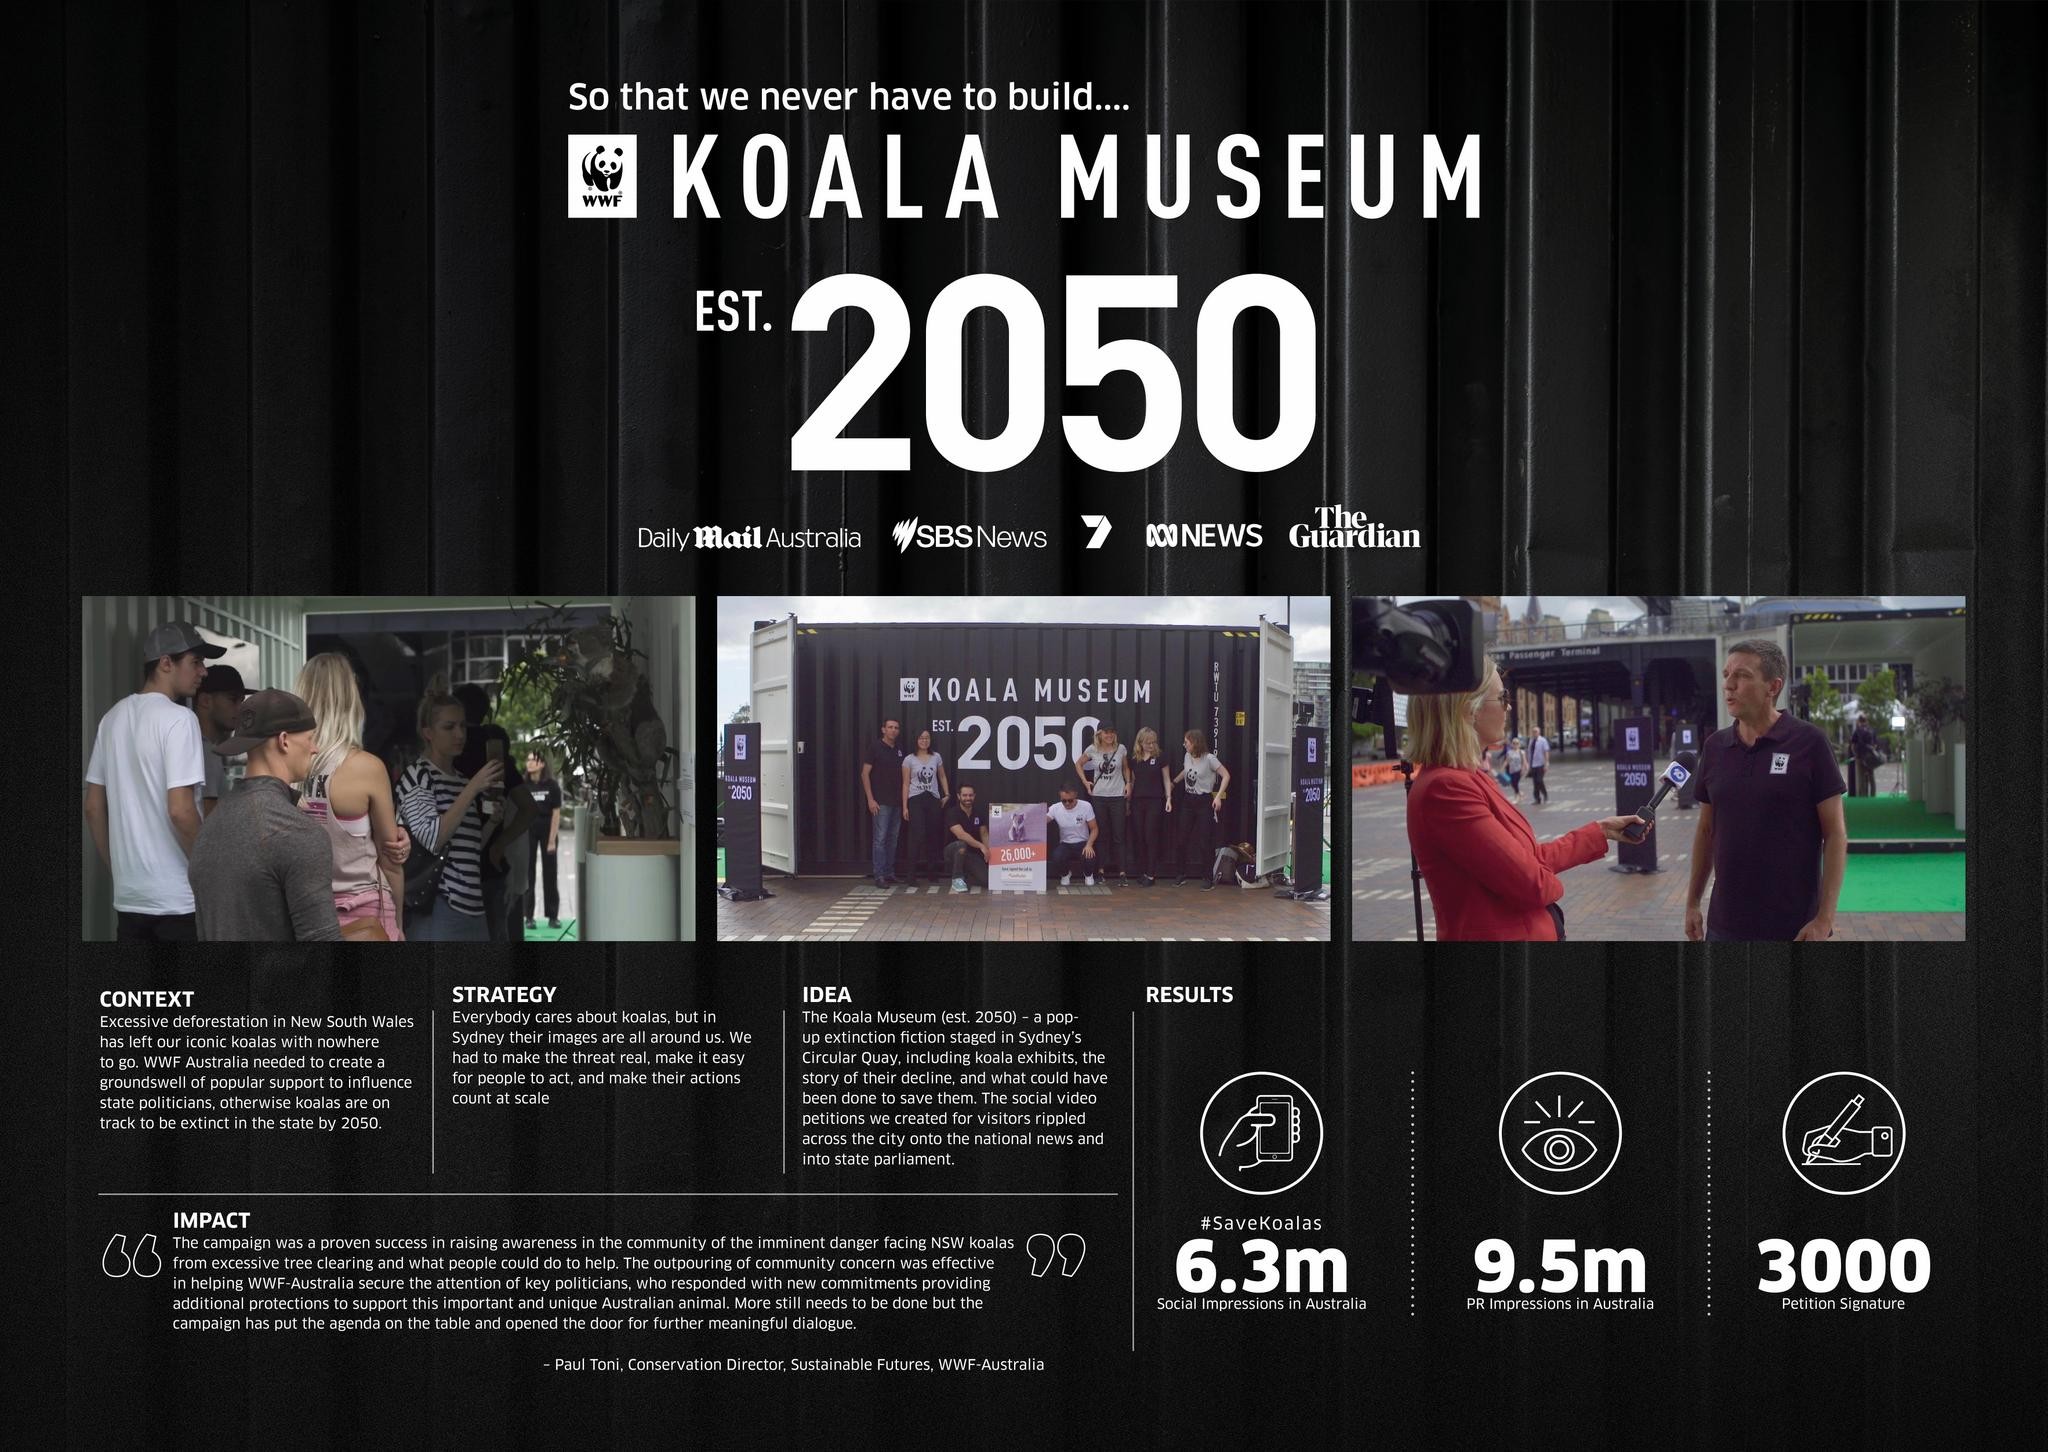 The Koala Museum (est. 2050)